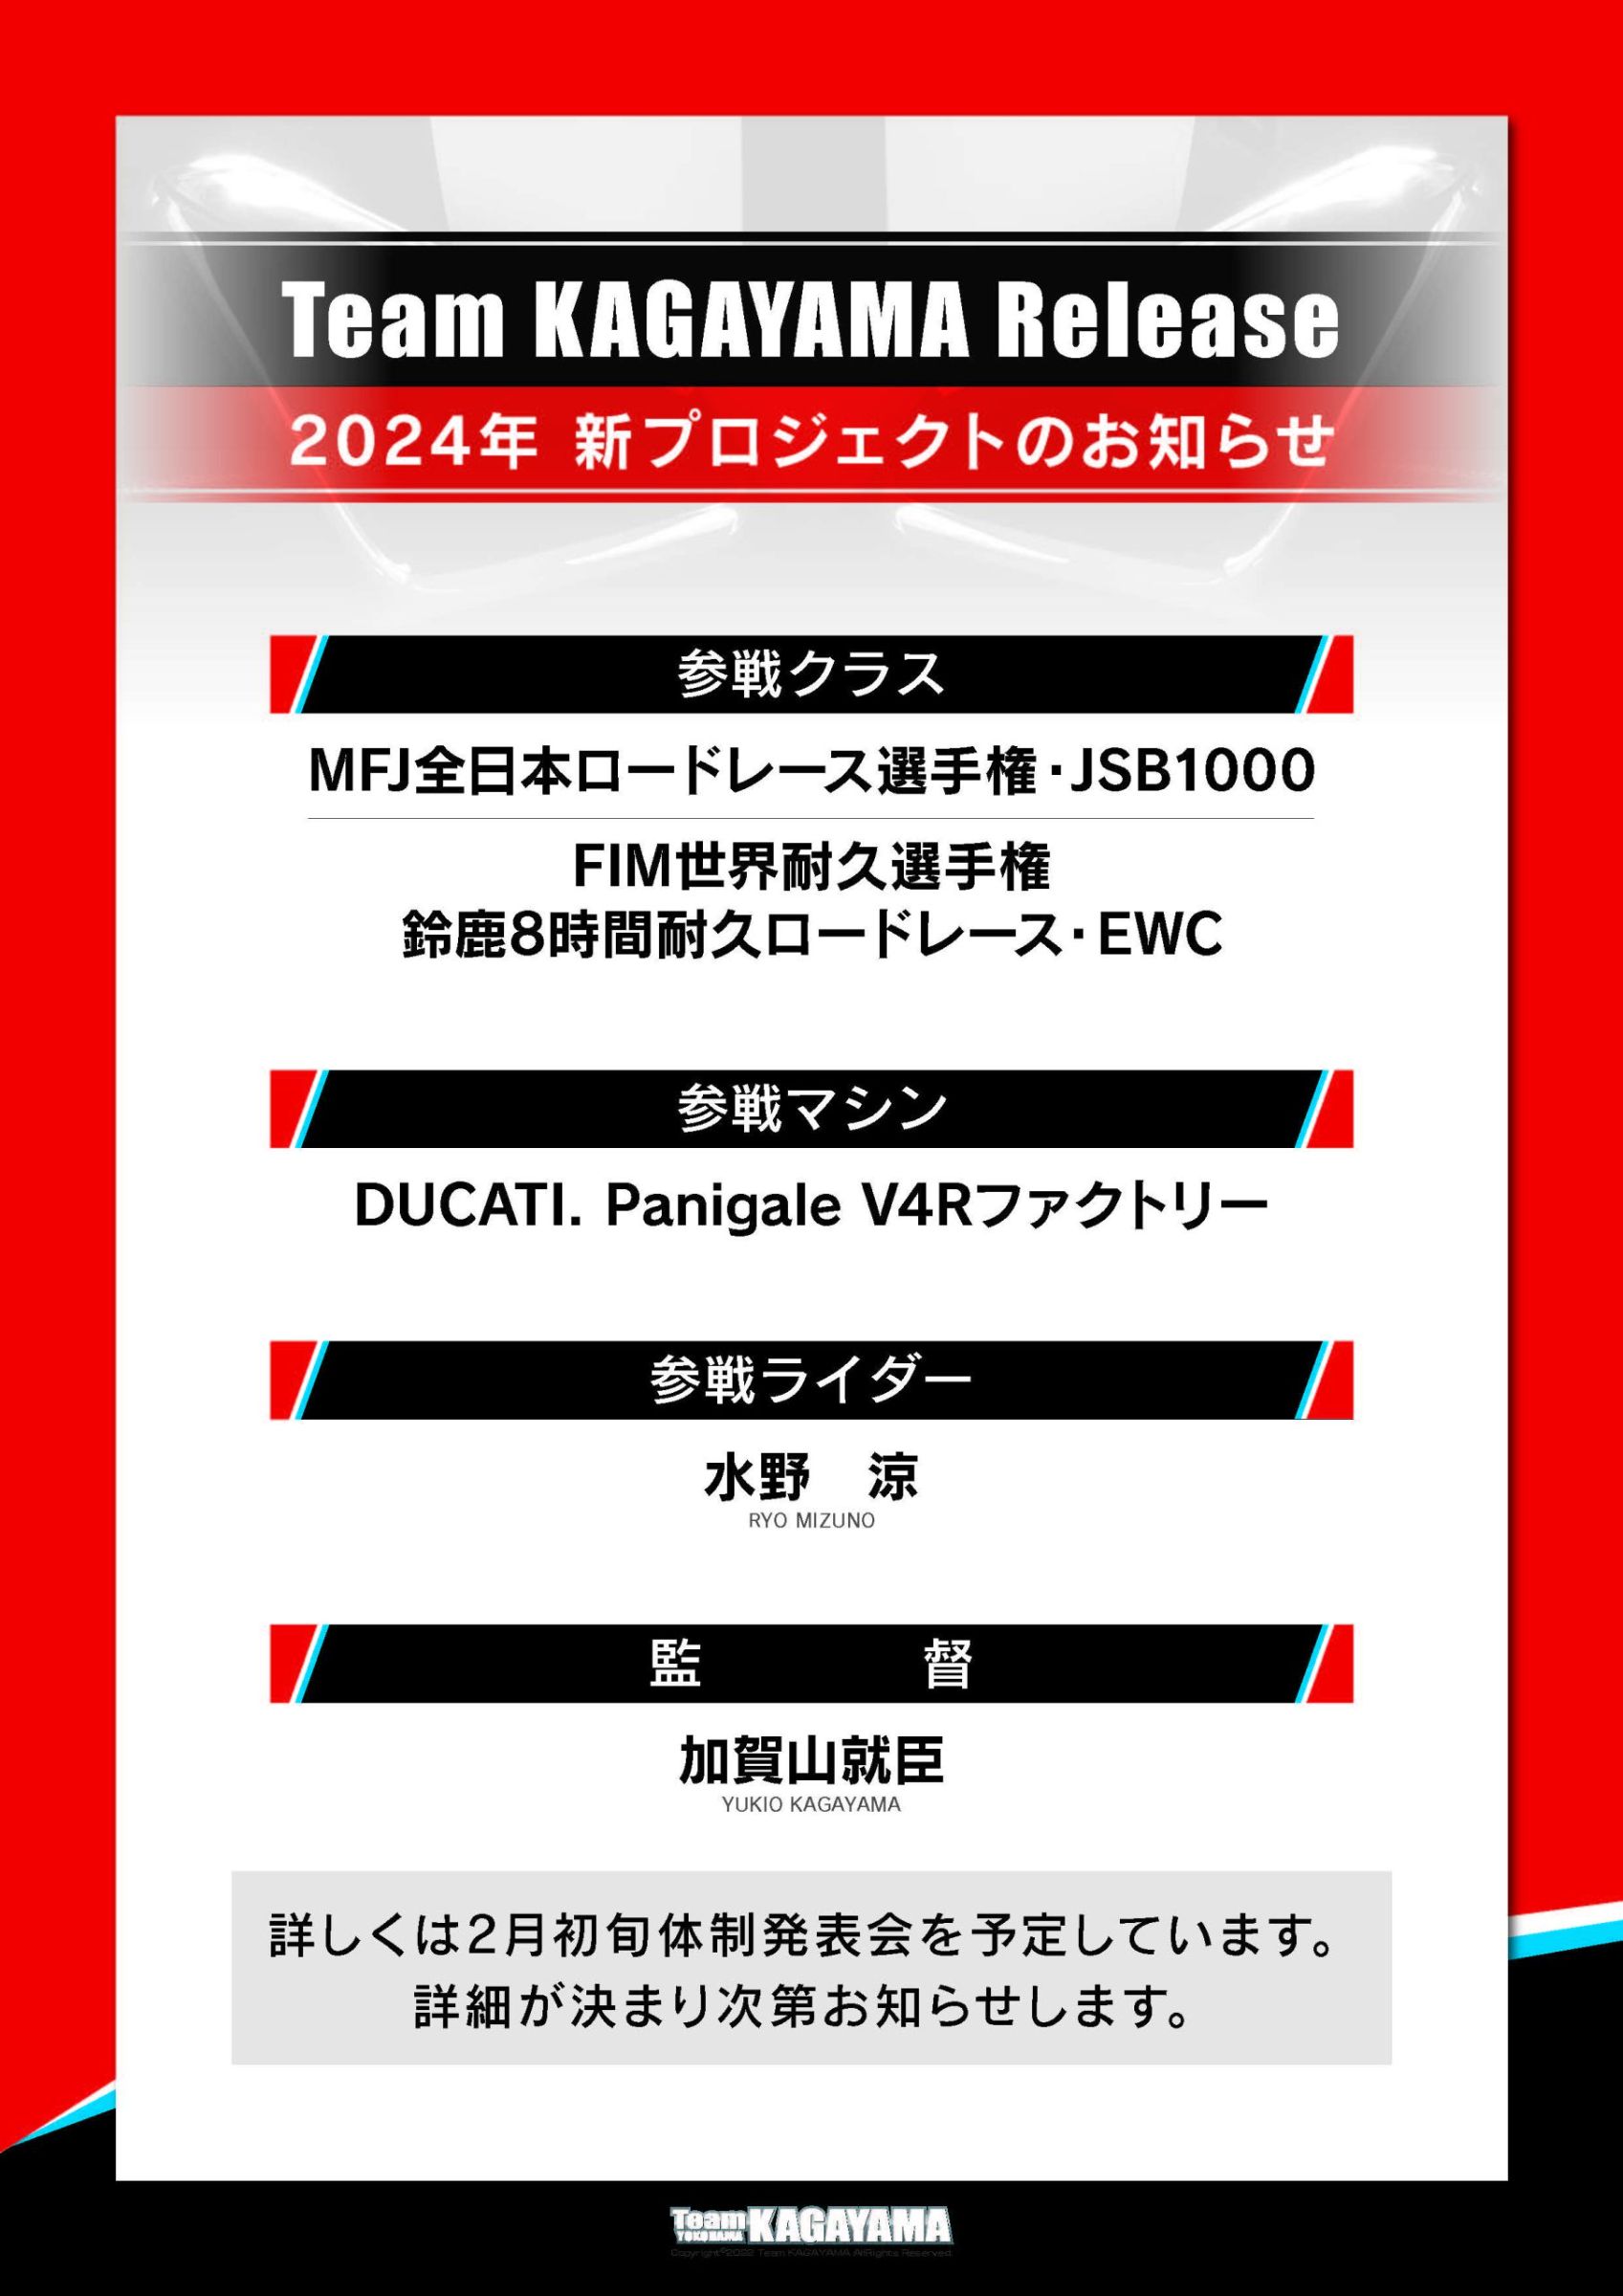 Team KAGAYAMAが2024年のチーム体制変更を発表。ライダーは 